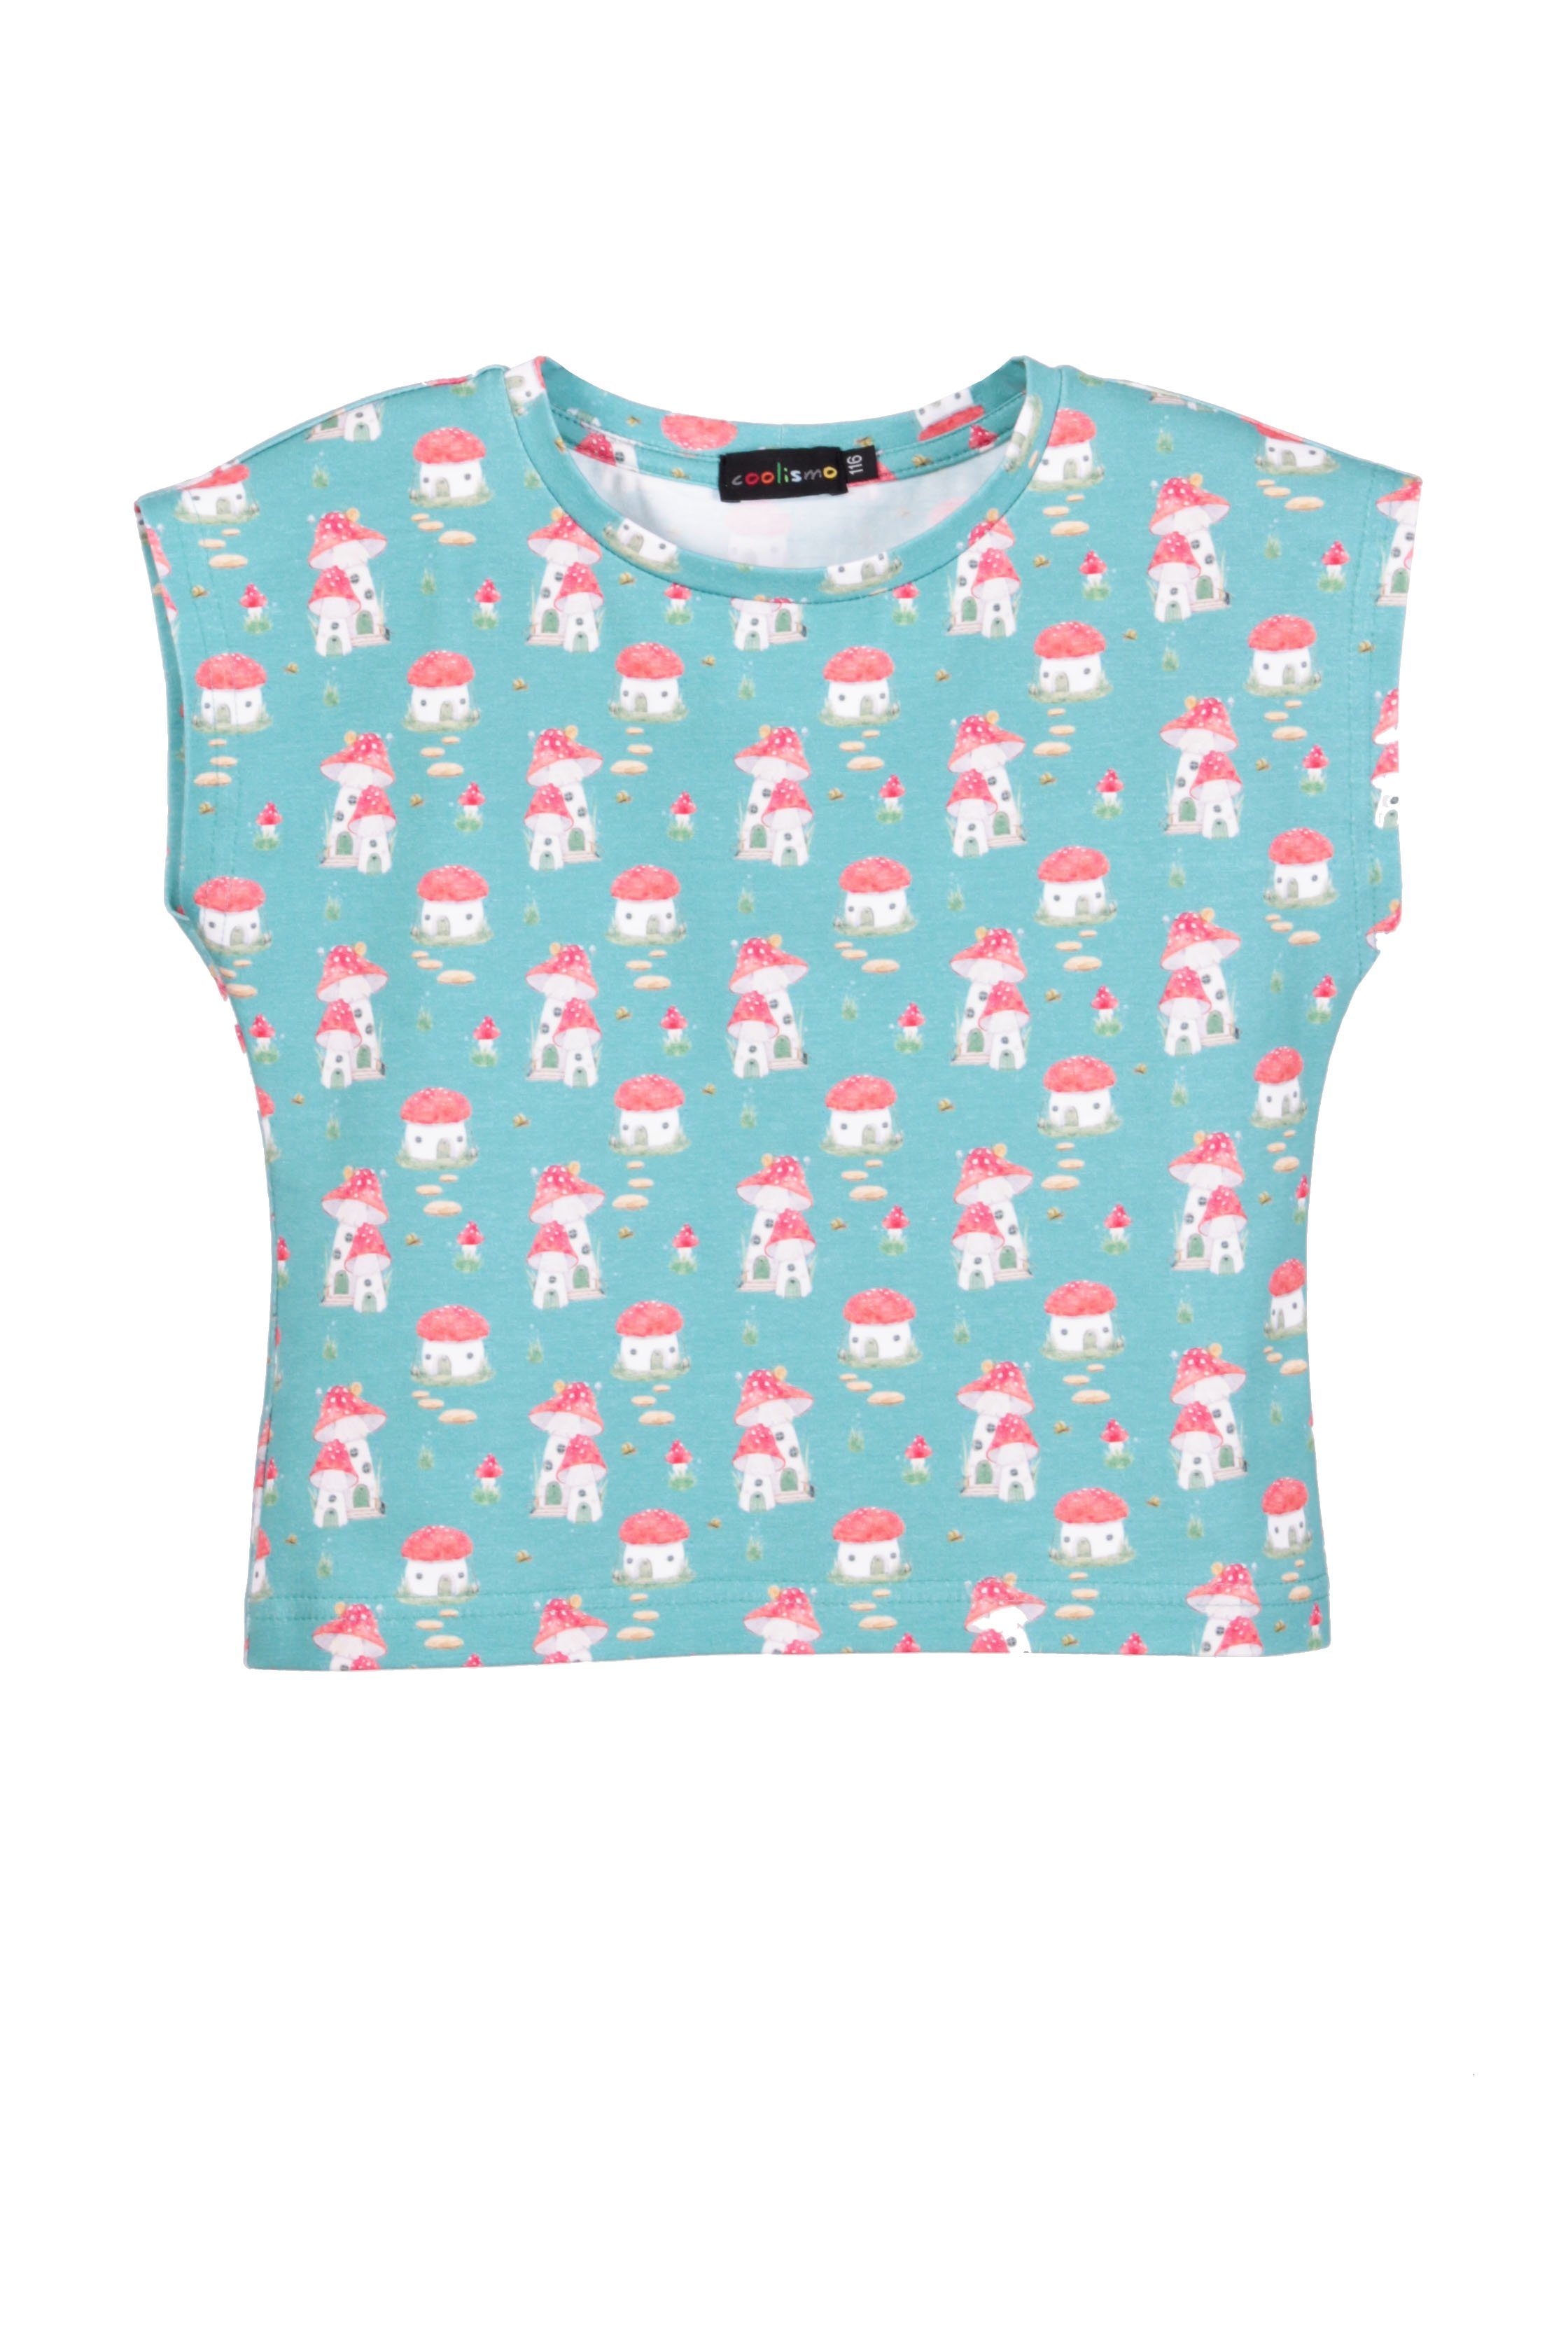 coolismo T-Shirt Mädchen T-Shirt Pferdchen Pilz-Design Baumwolle, Rundhalsauschnitt, europäische Produktion